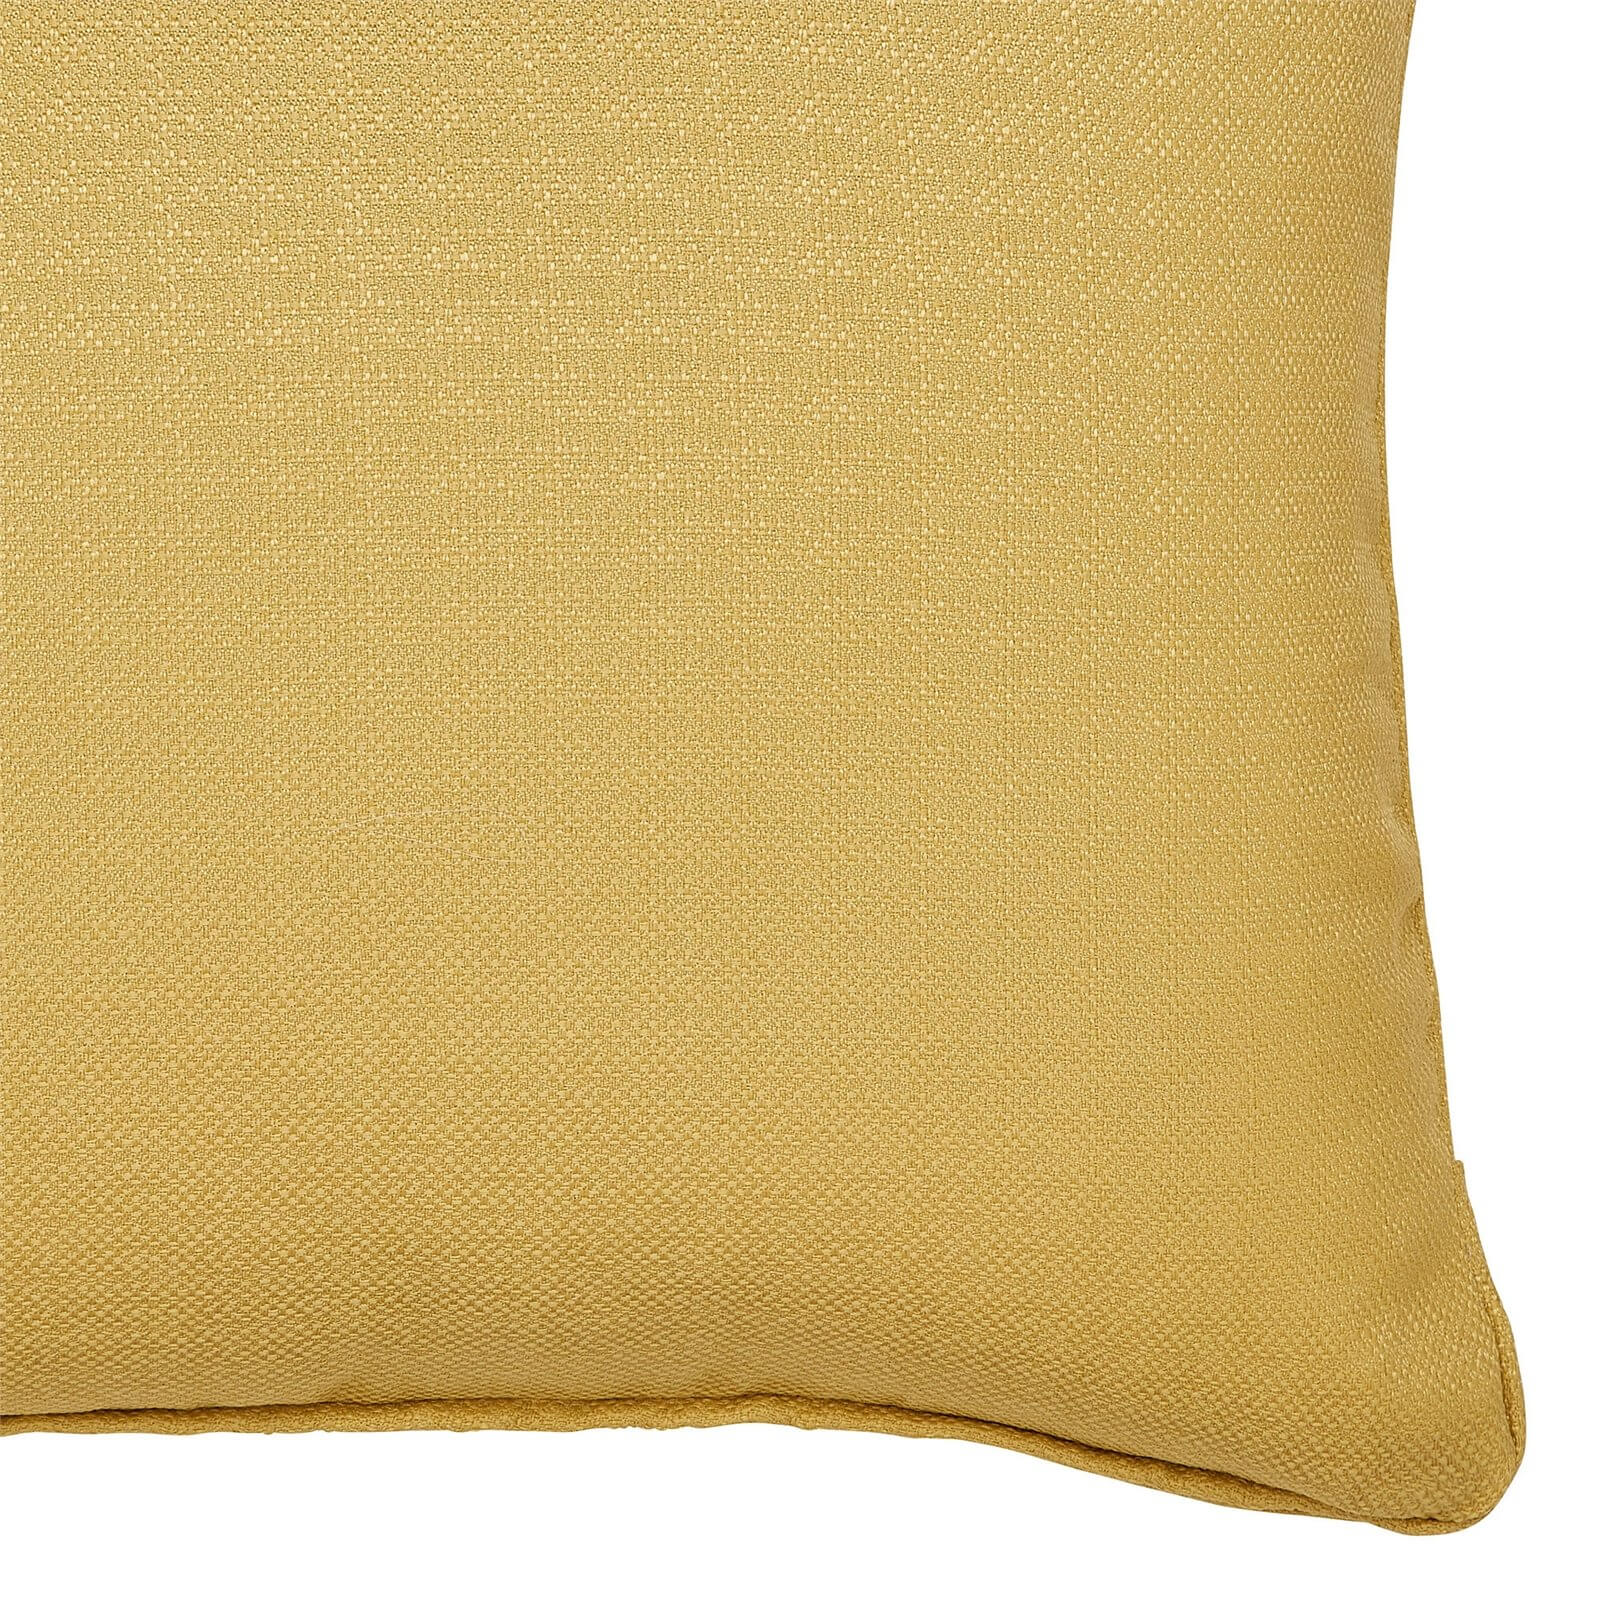 Helena Springfield Eden Cushions 45 x 45cm - Chartreuse